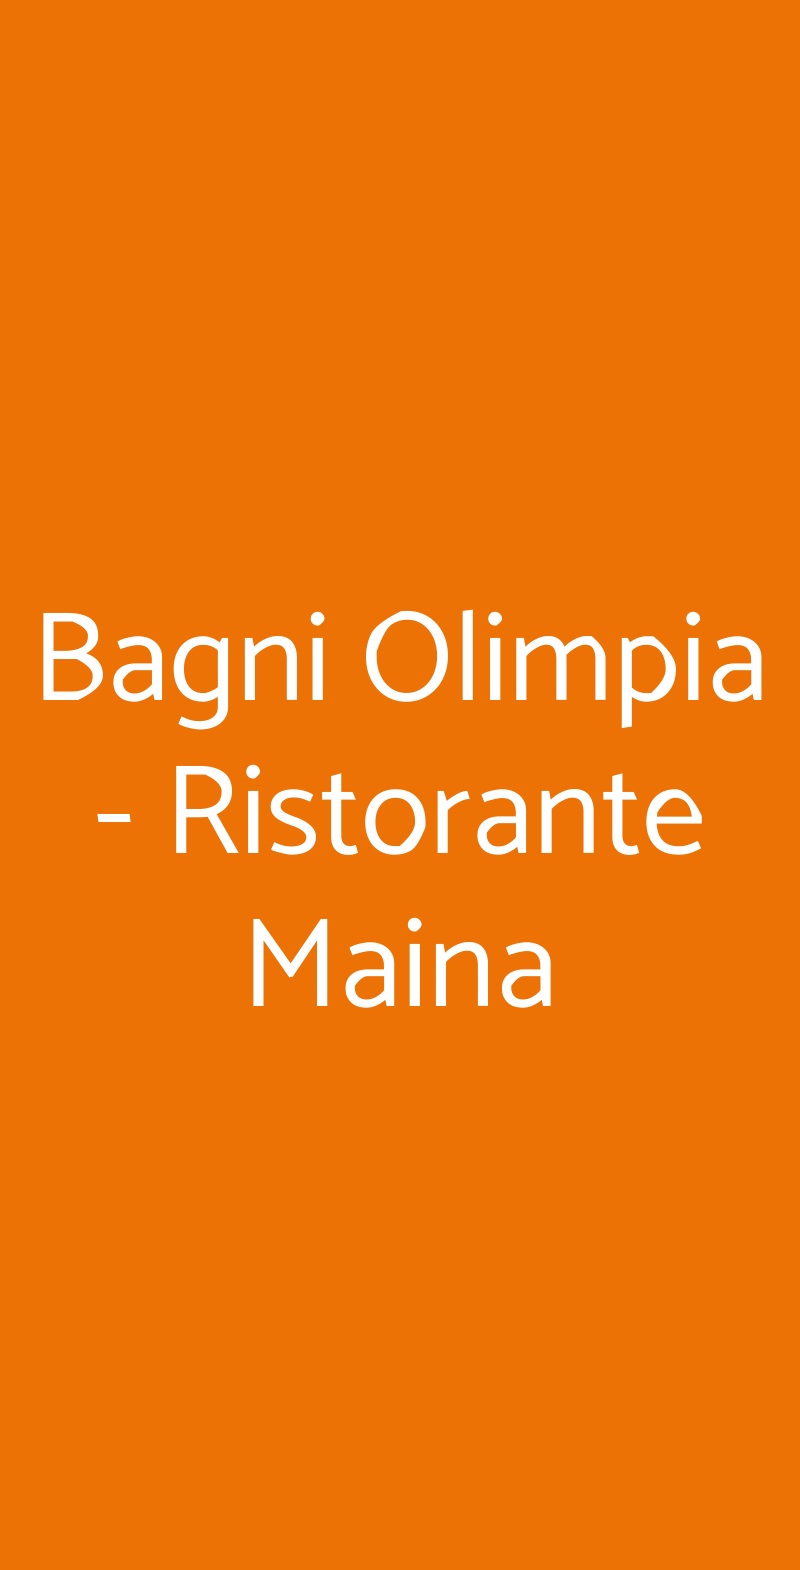 Bagni Olimpia - Ristorante Maina Savona menù 1 pagina